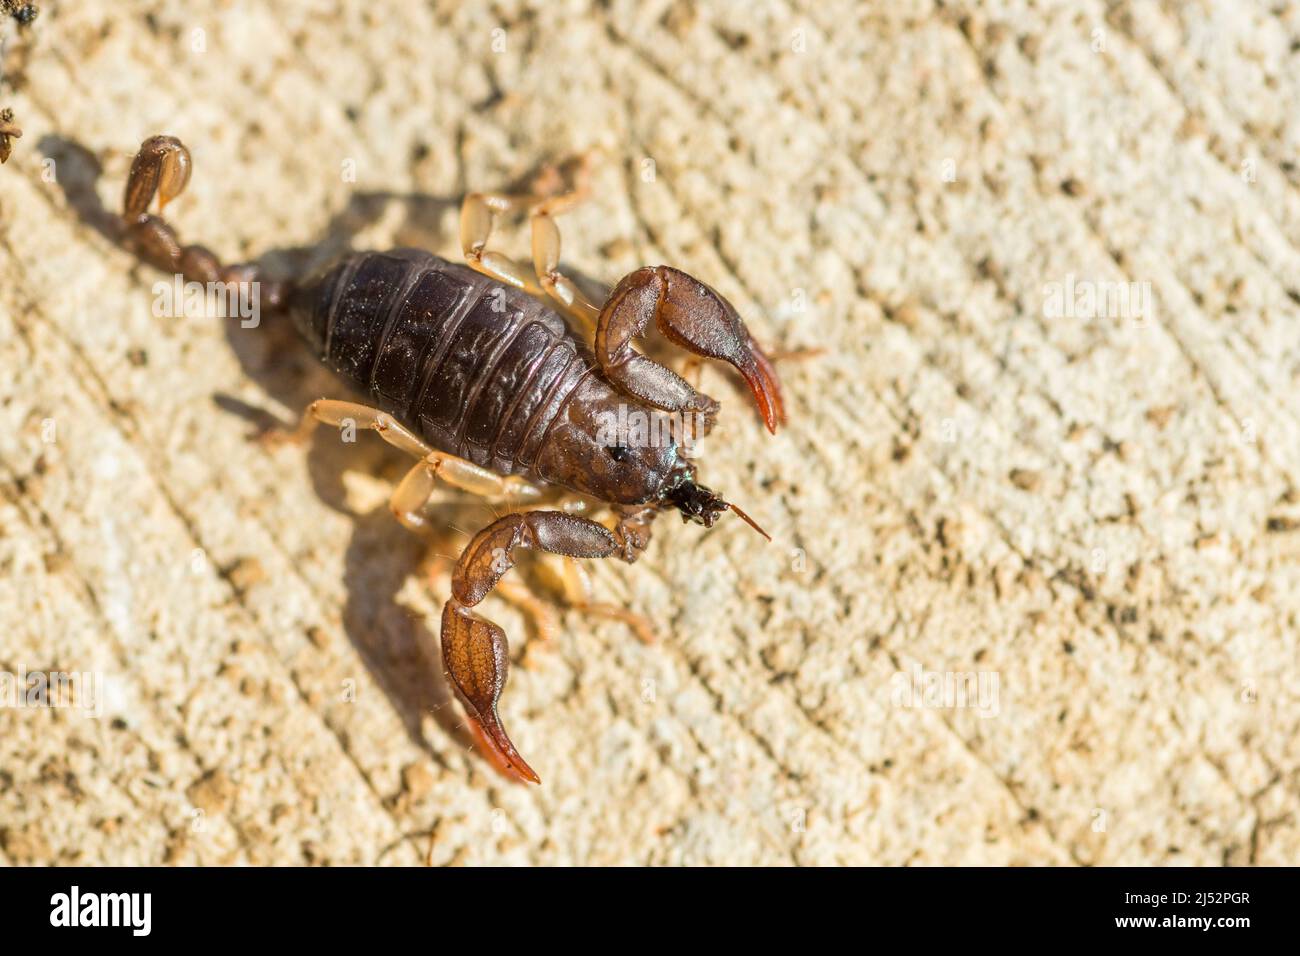 Euscorpius flavicaudis or Tetratrichobothrius flavicaudis, or the European yellow-tailed scorpion, a small scorpion, eat a prey. Stock Photo